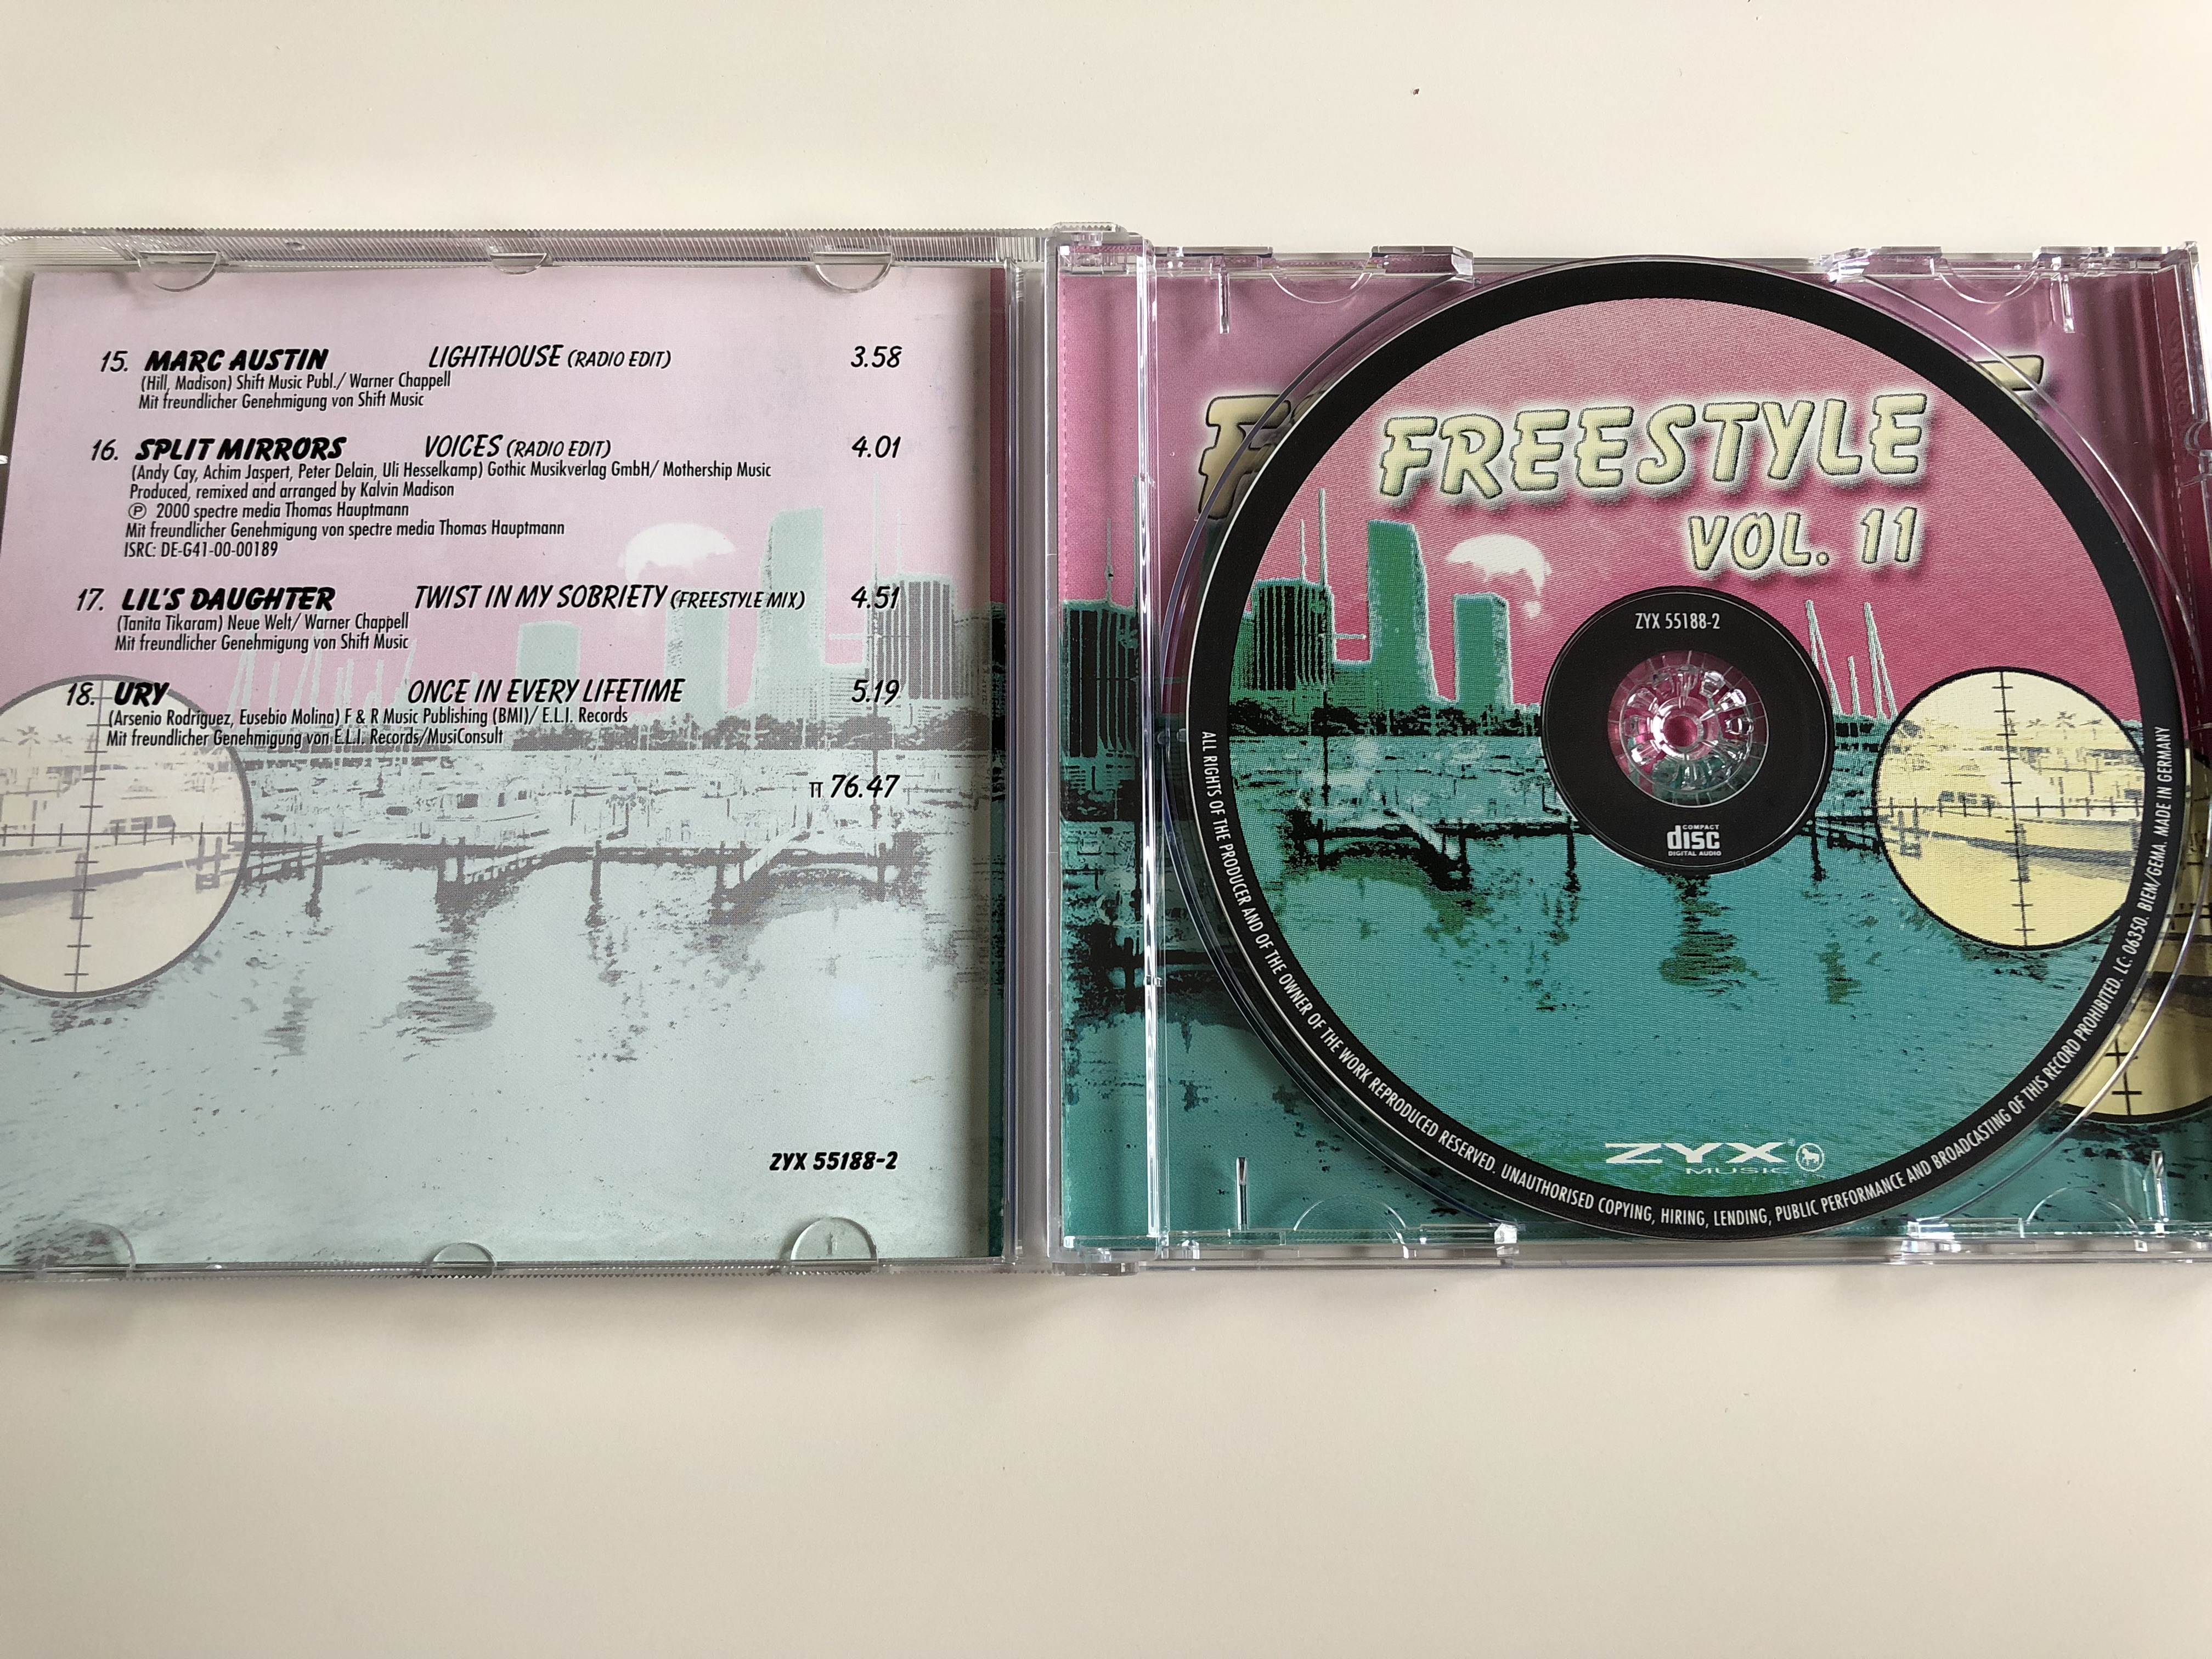 freestyle-vol.-11-flying-steps-stevie-b.-b.-v.-s.-m.-p.-free-team-pretty-girls-...-and-more-zyx-music-audio-cd-2000-zyx-55188-2-4-.jpg